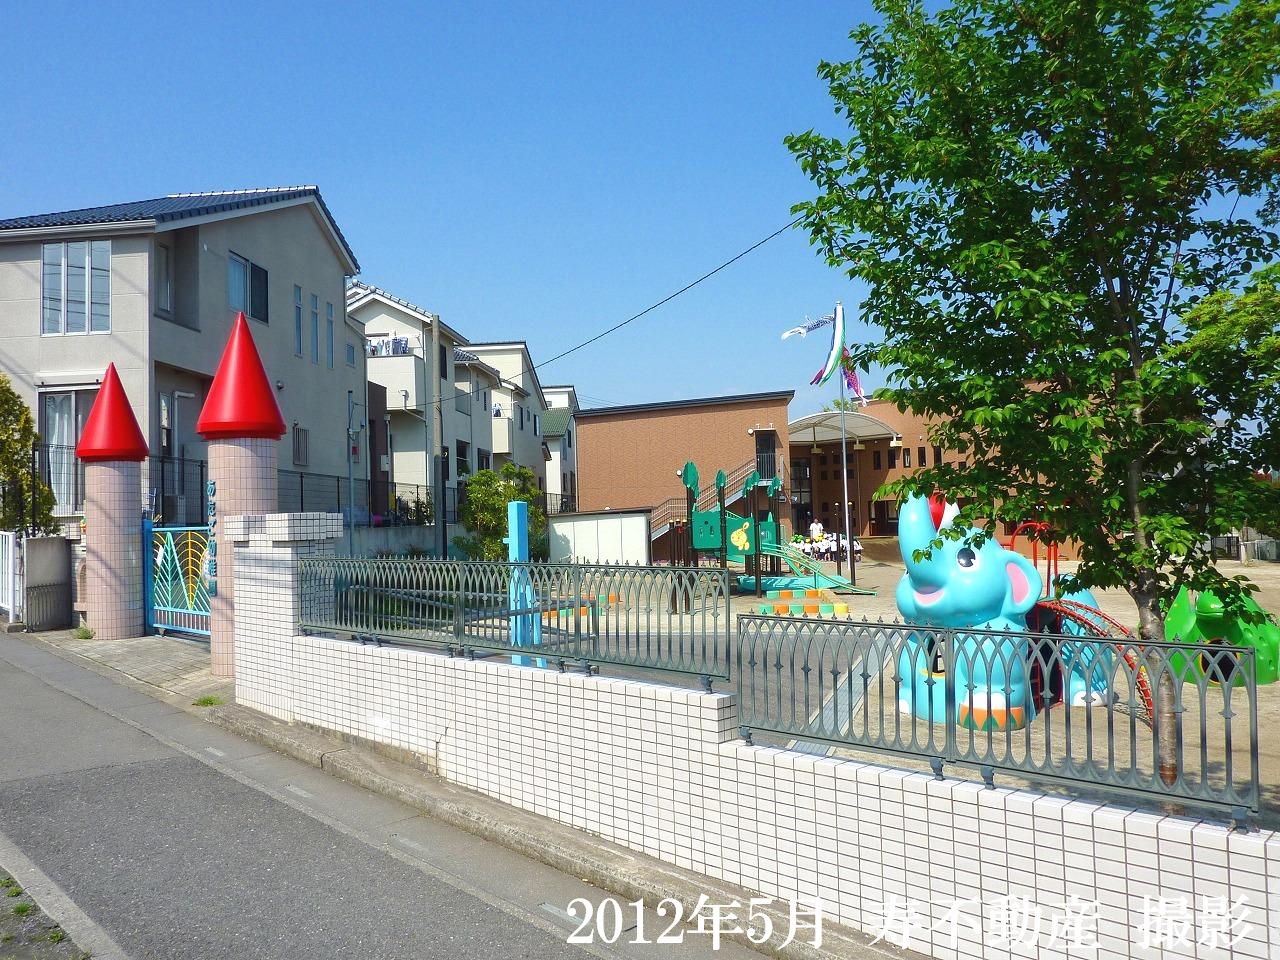 kindergarten ・ Nursery. Atago kindergarten (kindergarten ・ 592m to the nursery)